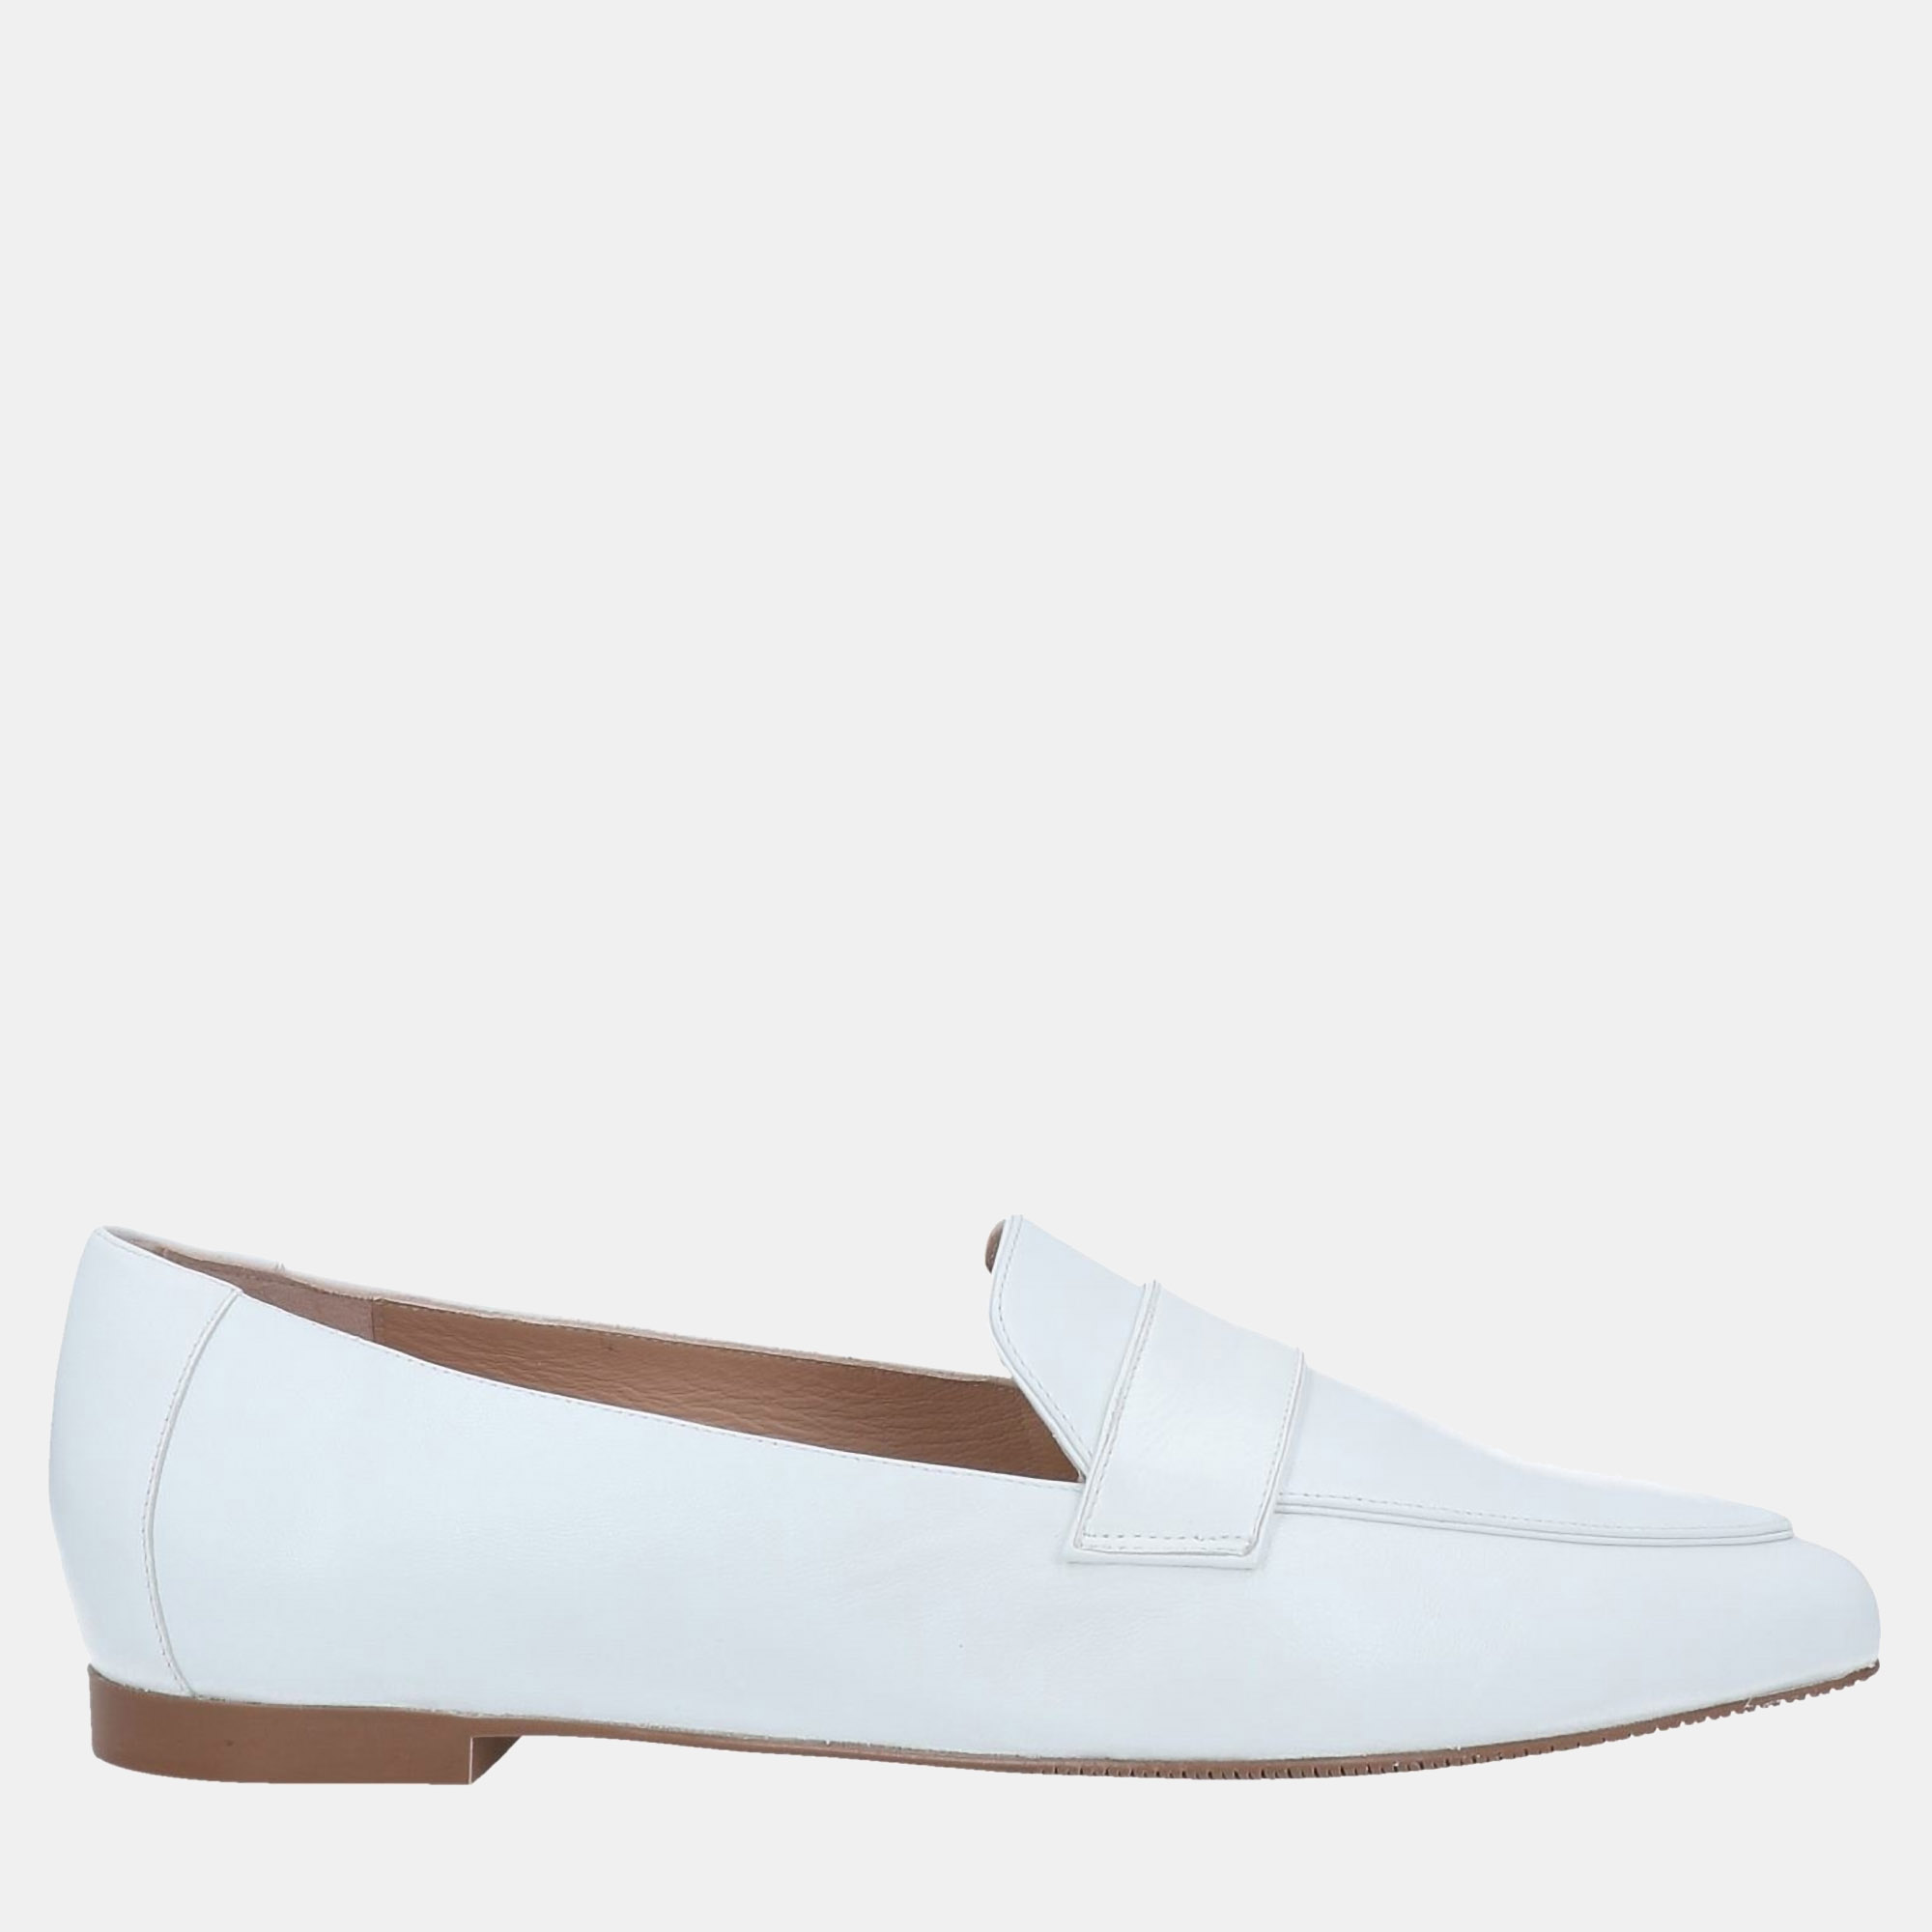 Stuart weitzman white leather loafers size 36